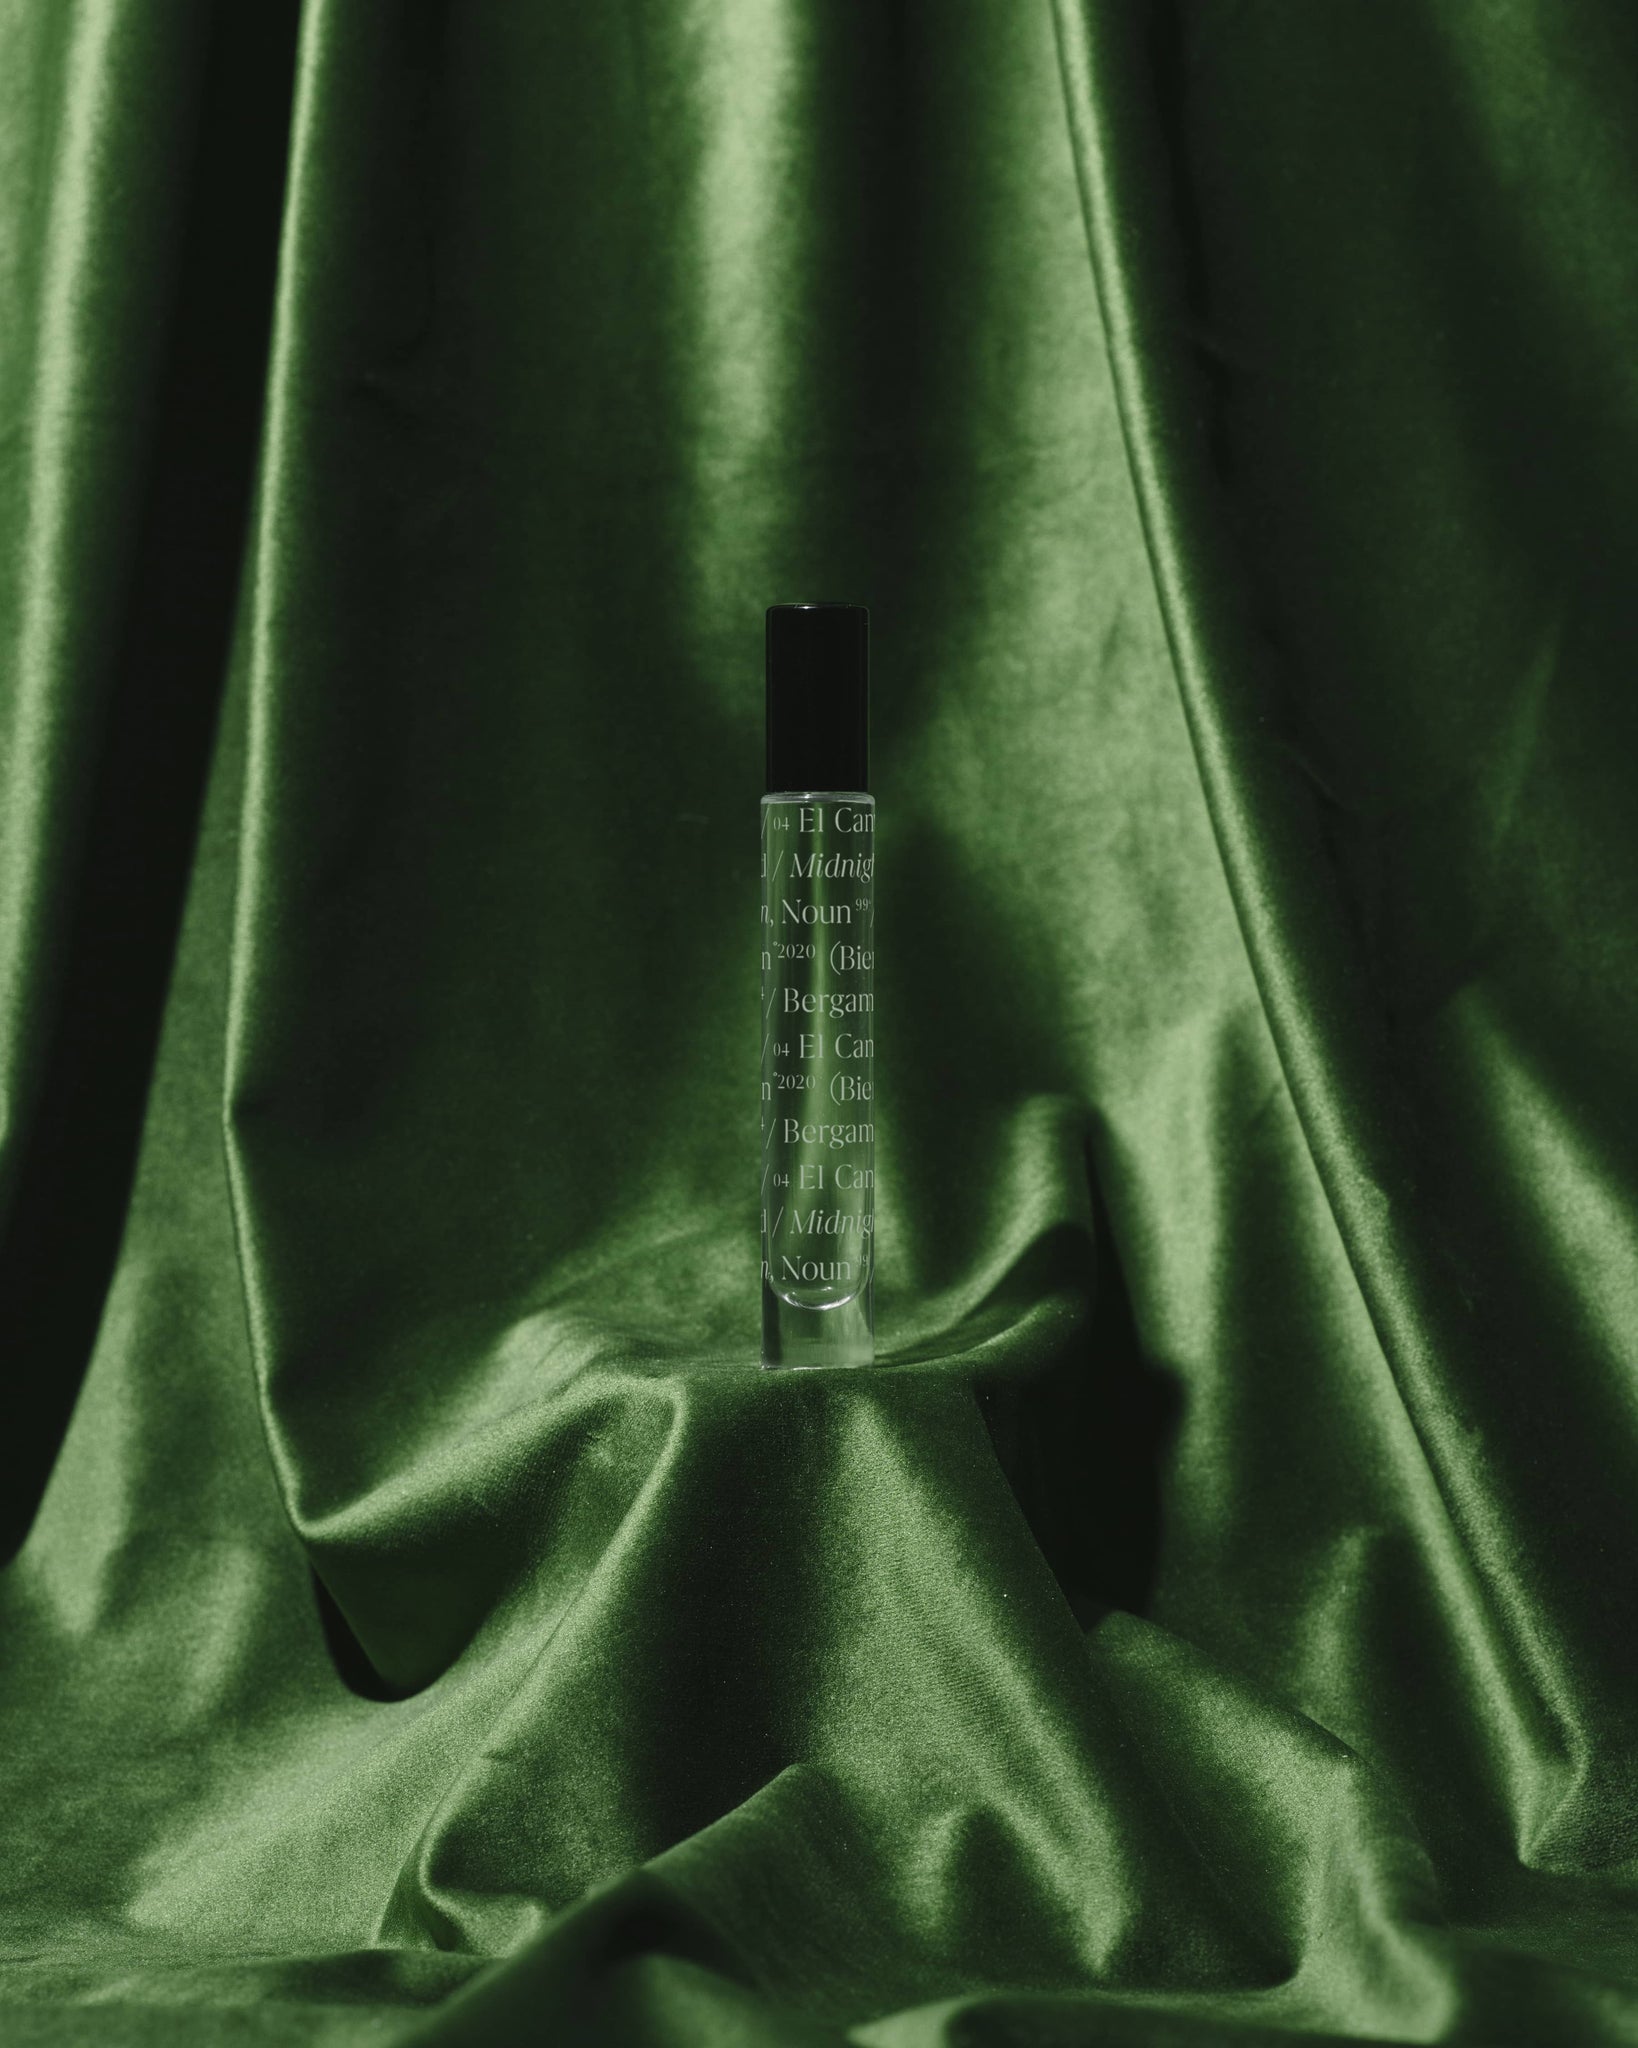 Glass Perfume Bottle Mockup No. 5 - Copal Studio Packaging Mockups For Designers